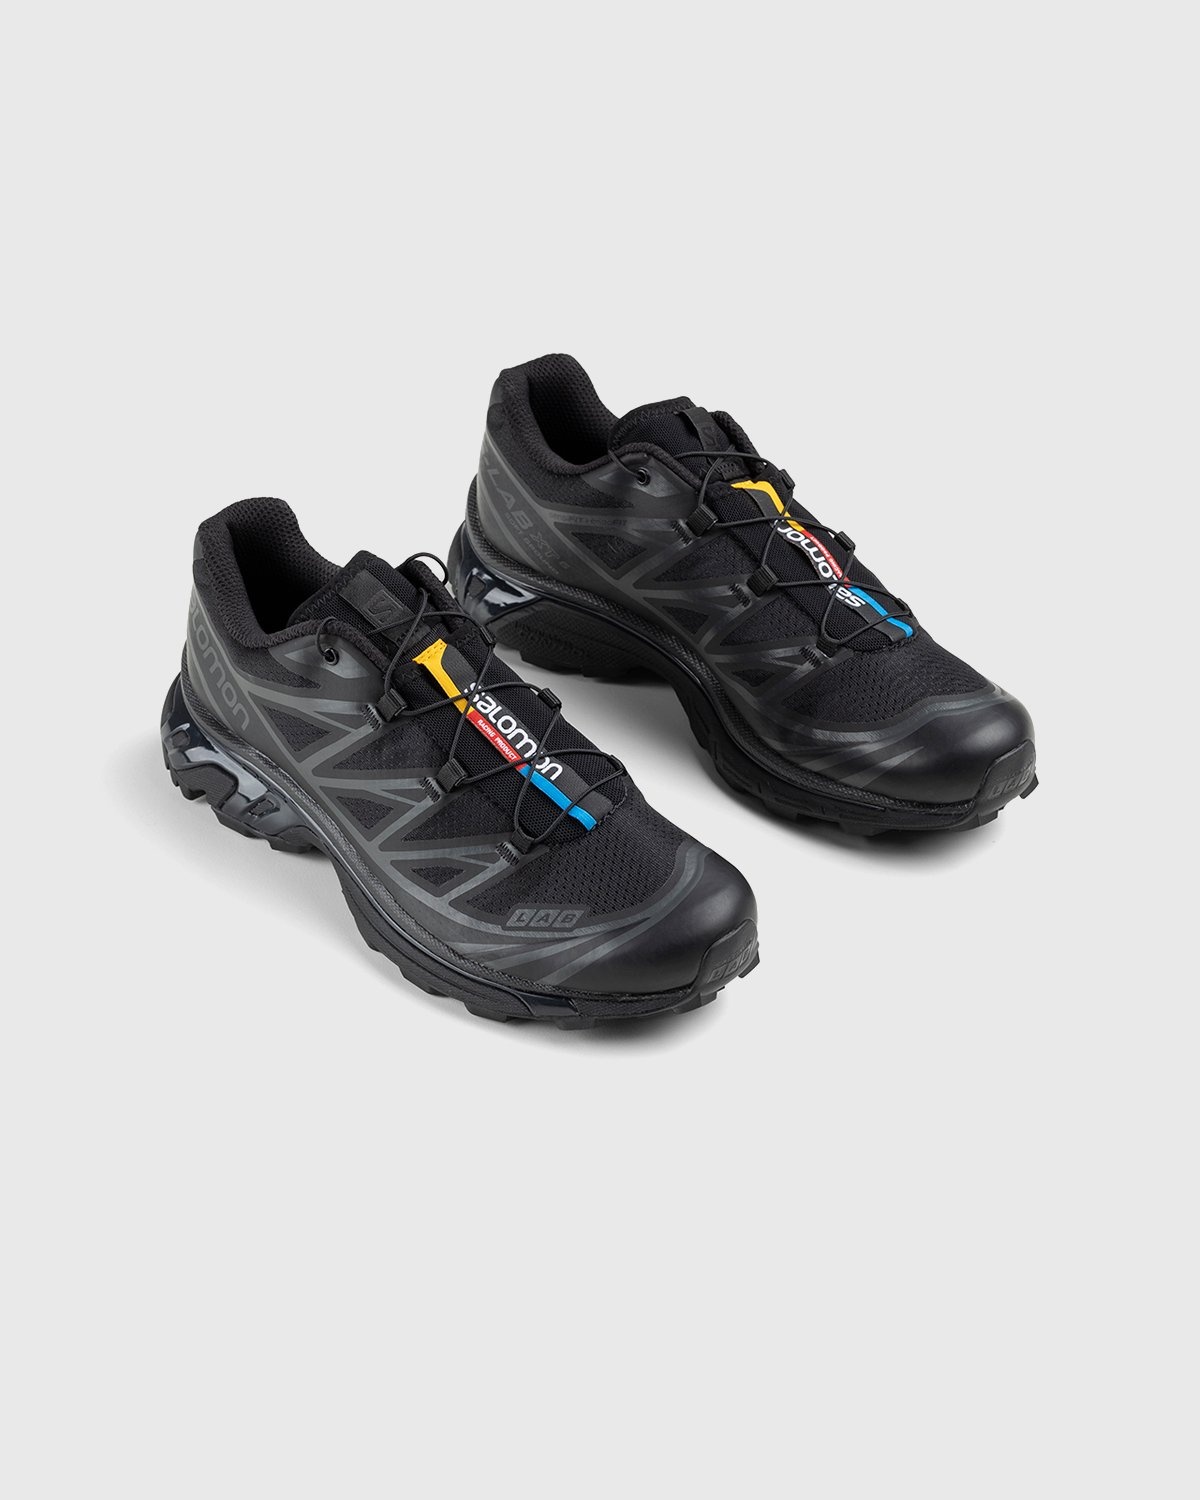 Salomon – XT-6 Advanced Black Phantom - Low Top Sneakers - Black - Image 3